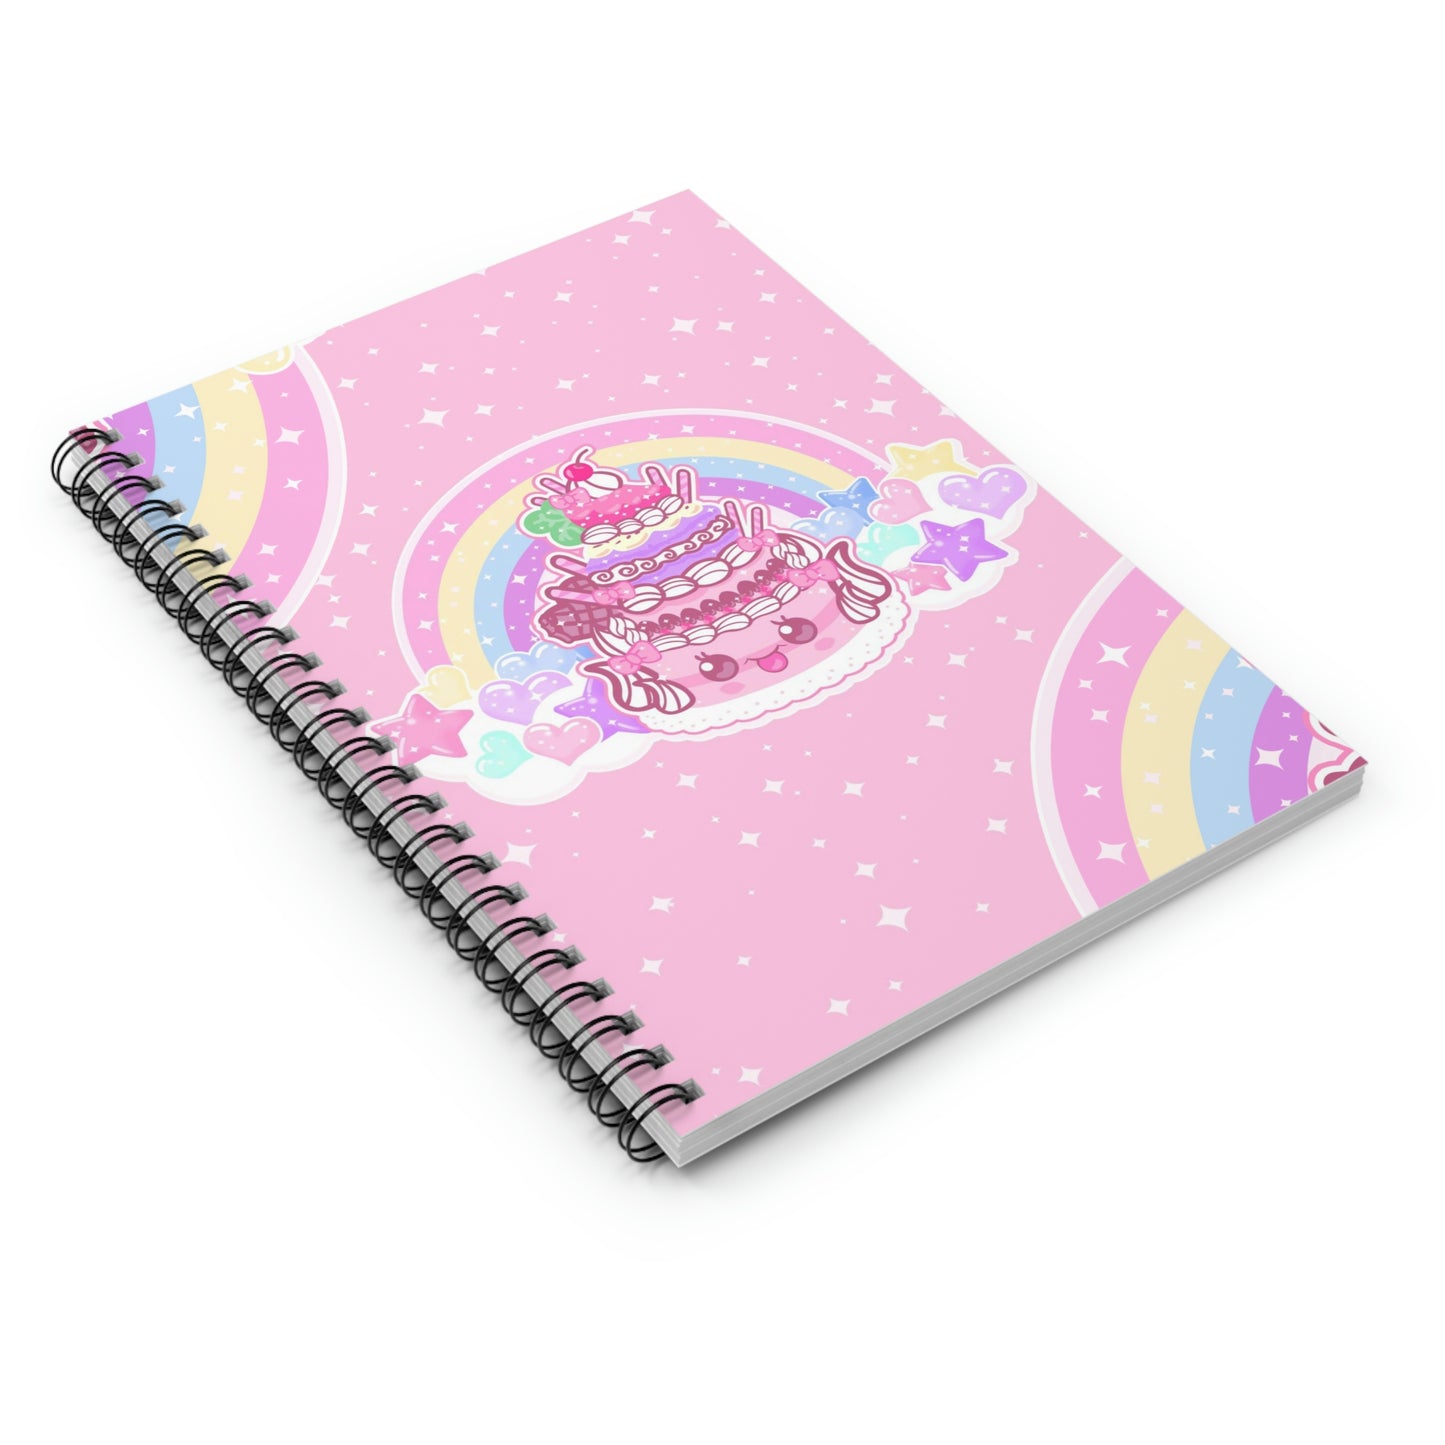 Kawaii Sparkle Cake Spiral Notebook - Ruled Line